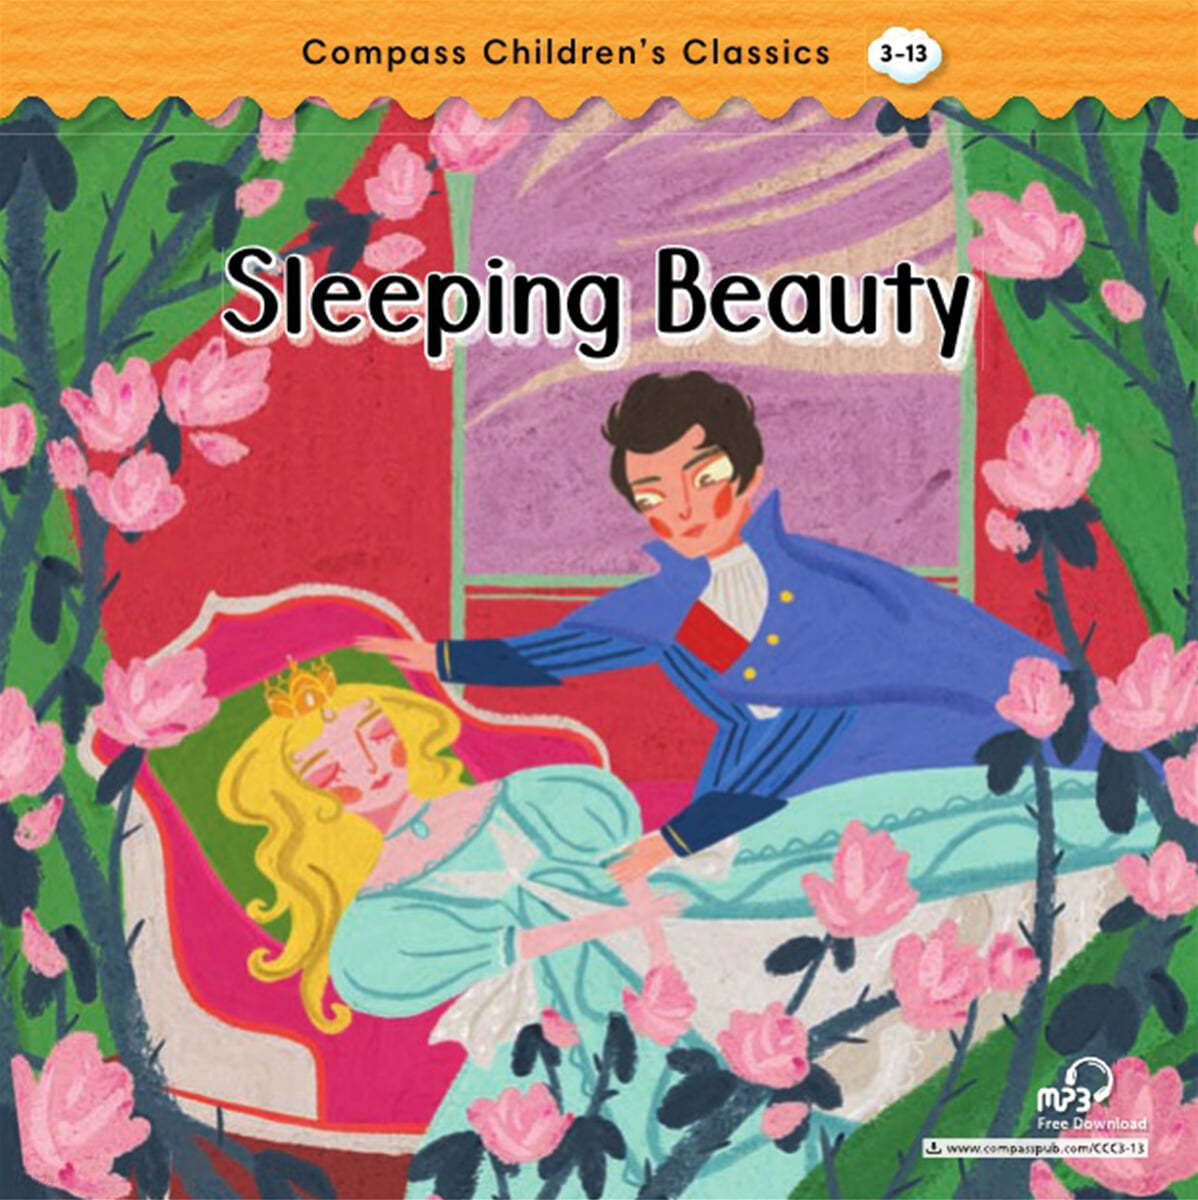 Compass Children’s Classic Readers Level 3 : Sleeping Beauty